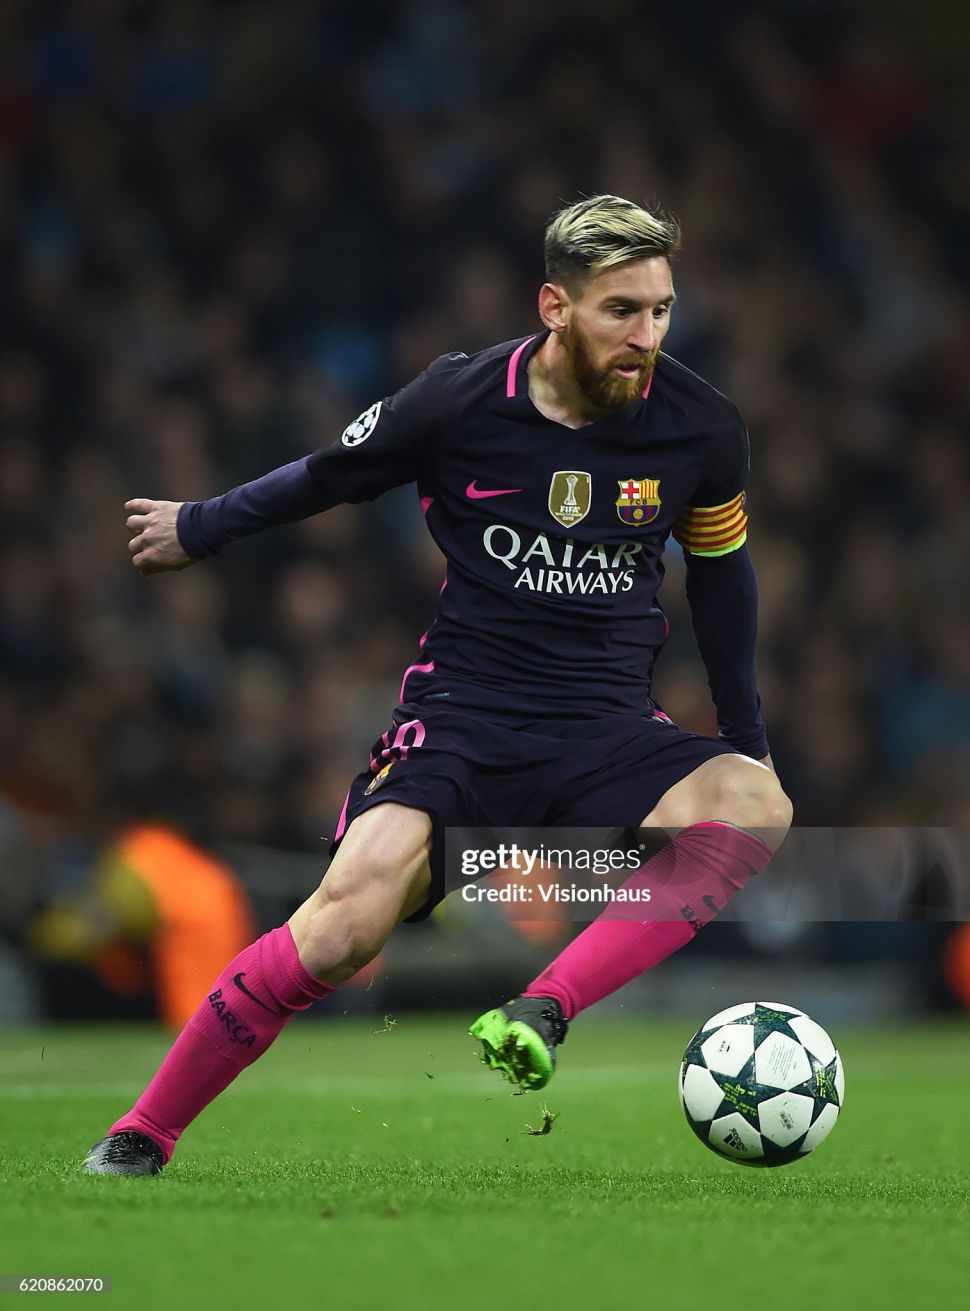 Font Messi 10 Barcelona 2016 2017 away nameset pink official tên số